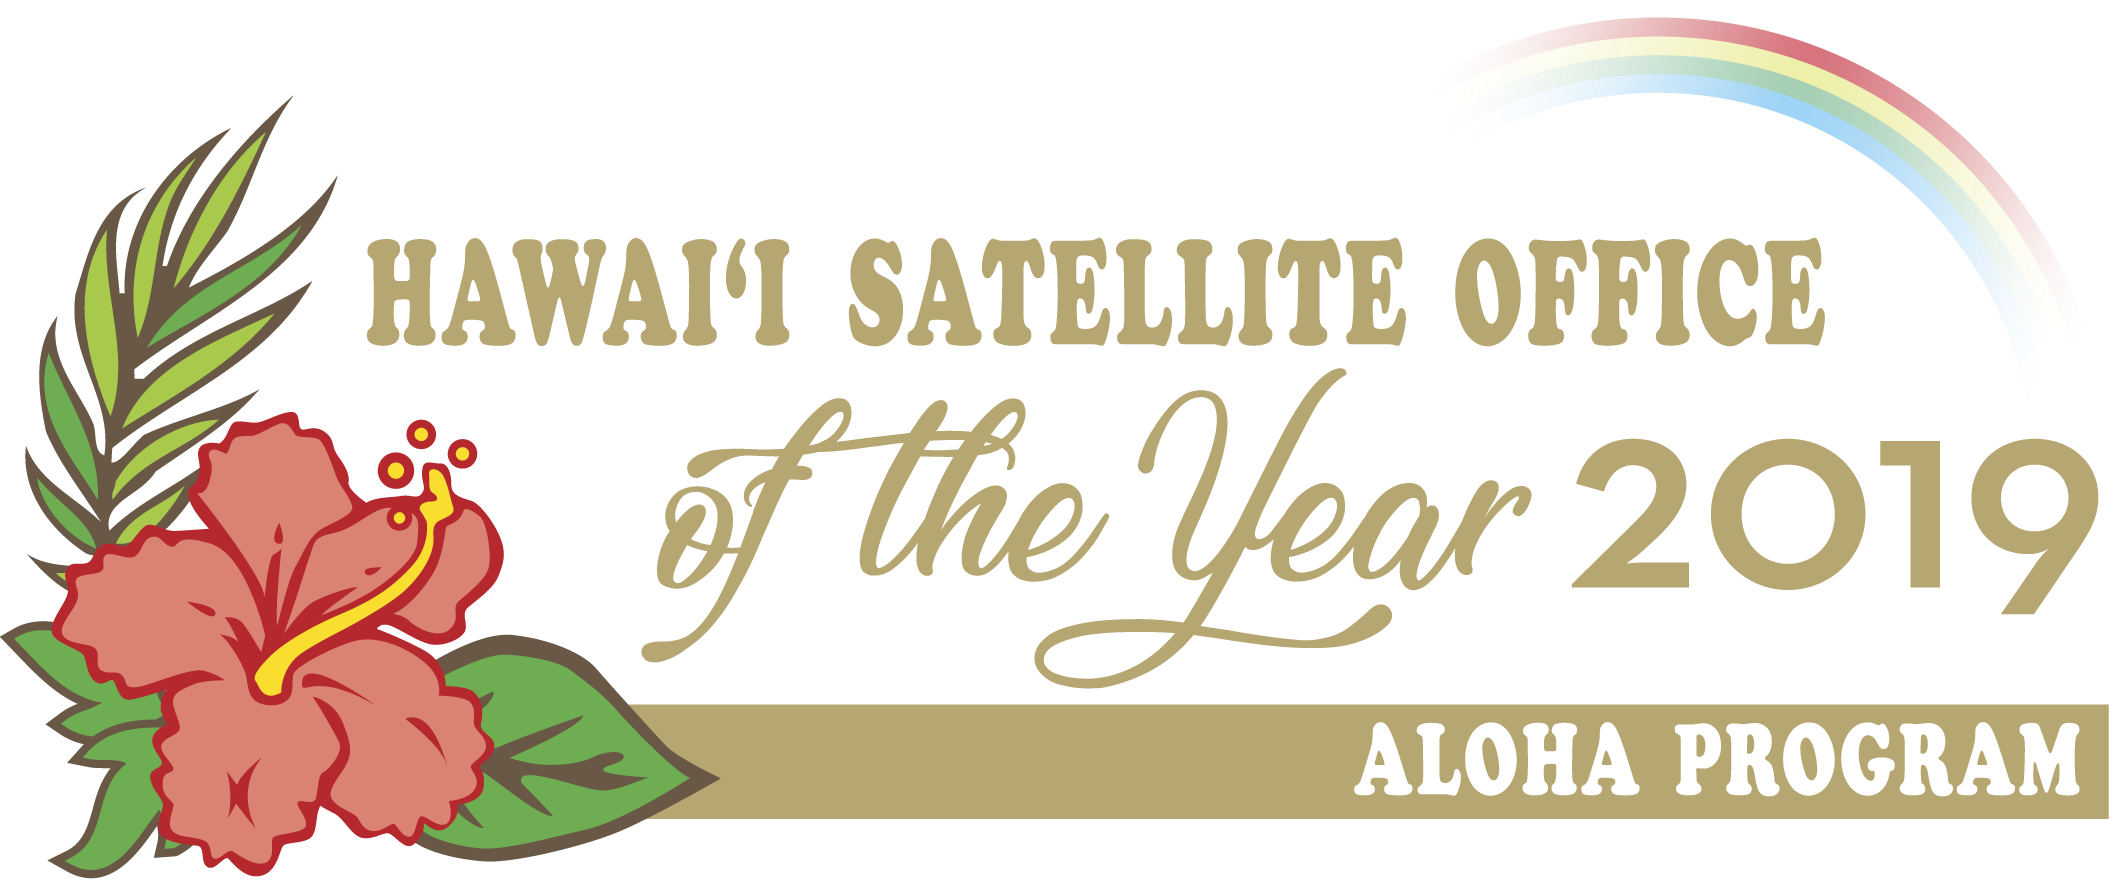 HAWAI'I SATELLITE OFFICE of the year 2019 ALOHA PROGRAM